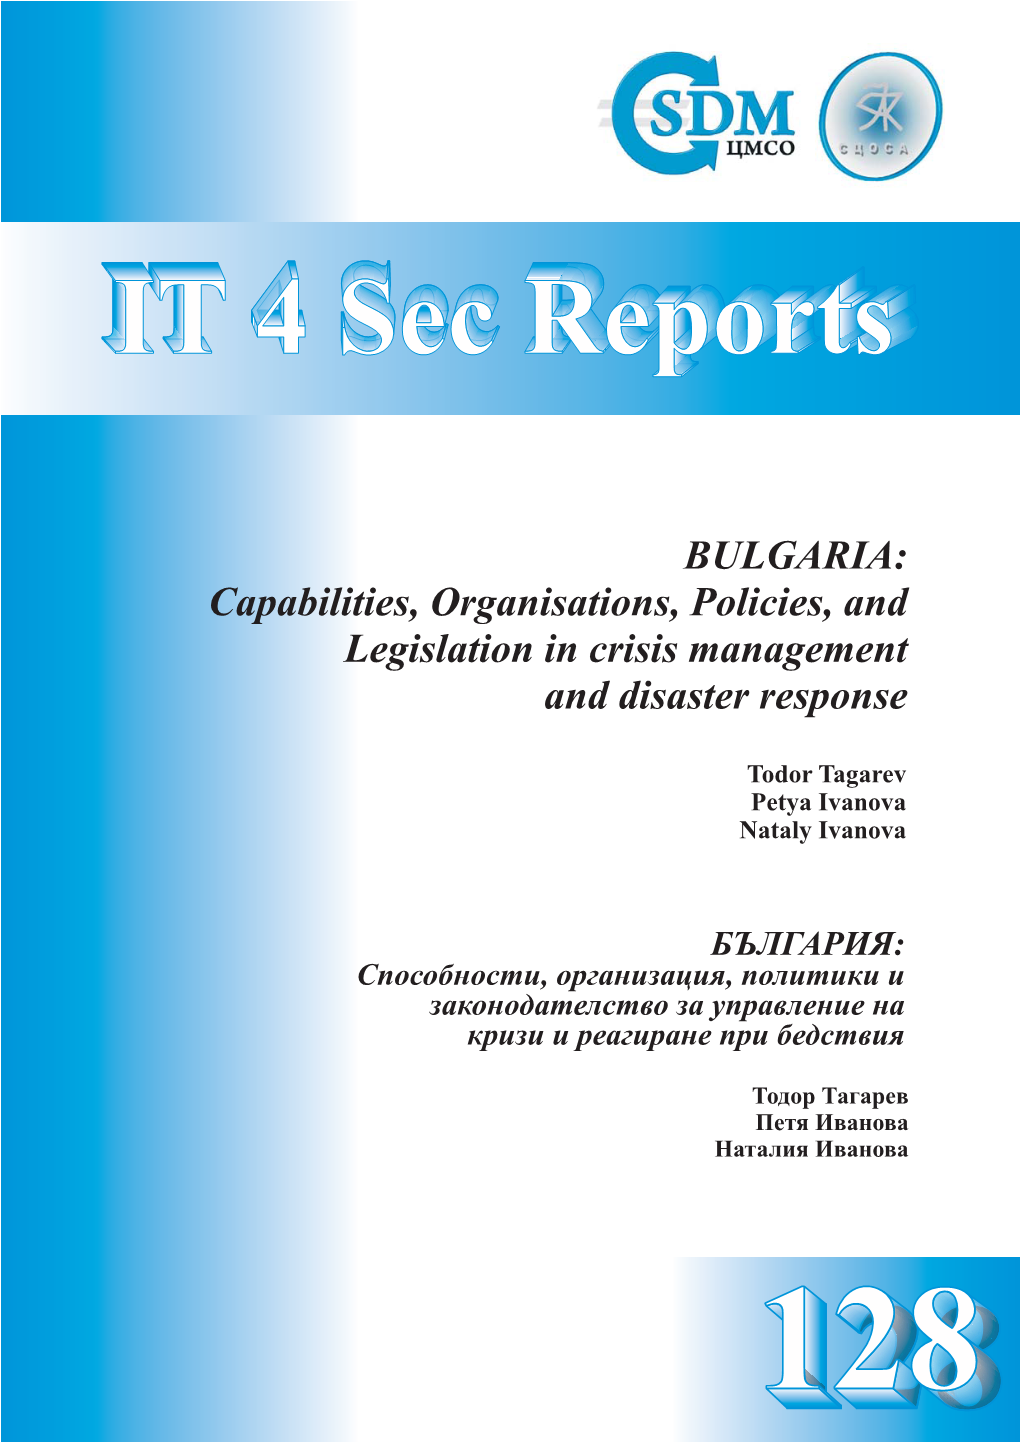 BULGARIA: Capabilities, Organisations, Policies, and Legislation in Crisis Management and Disaster Response